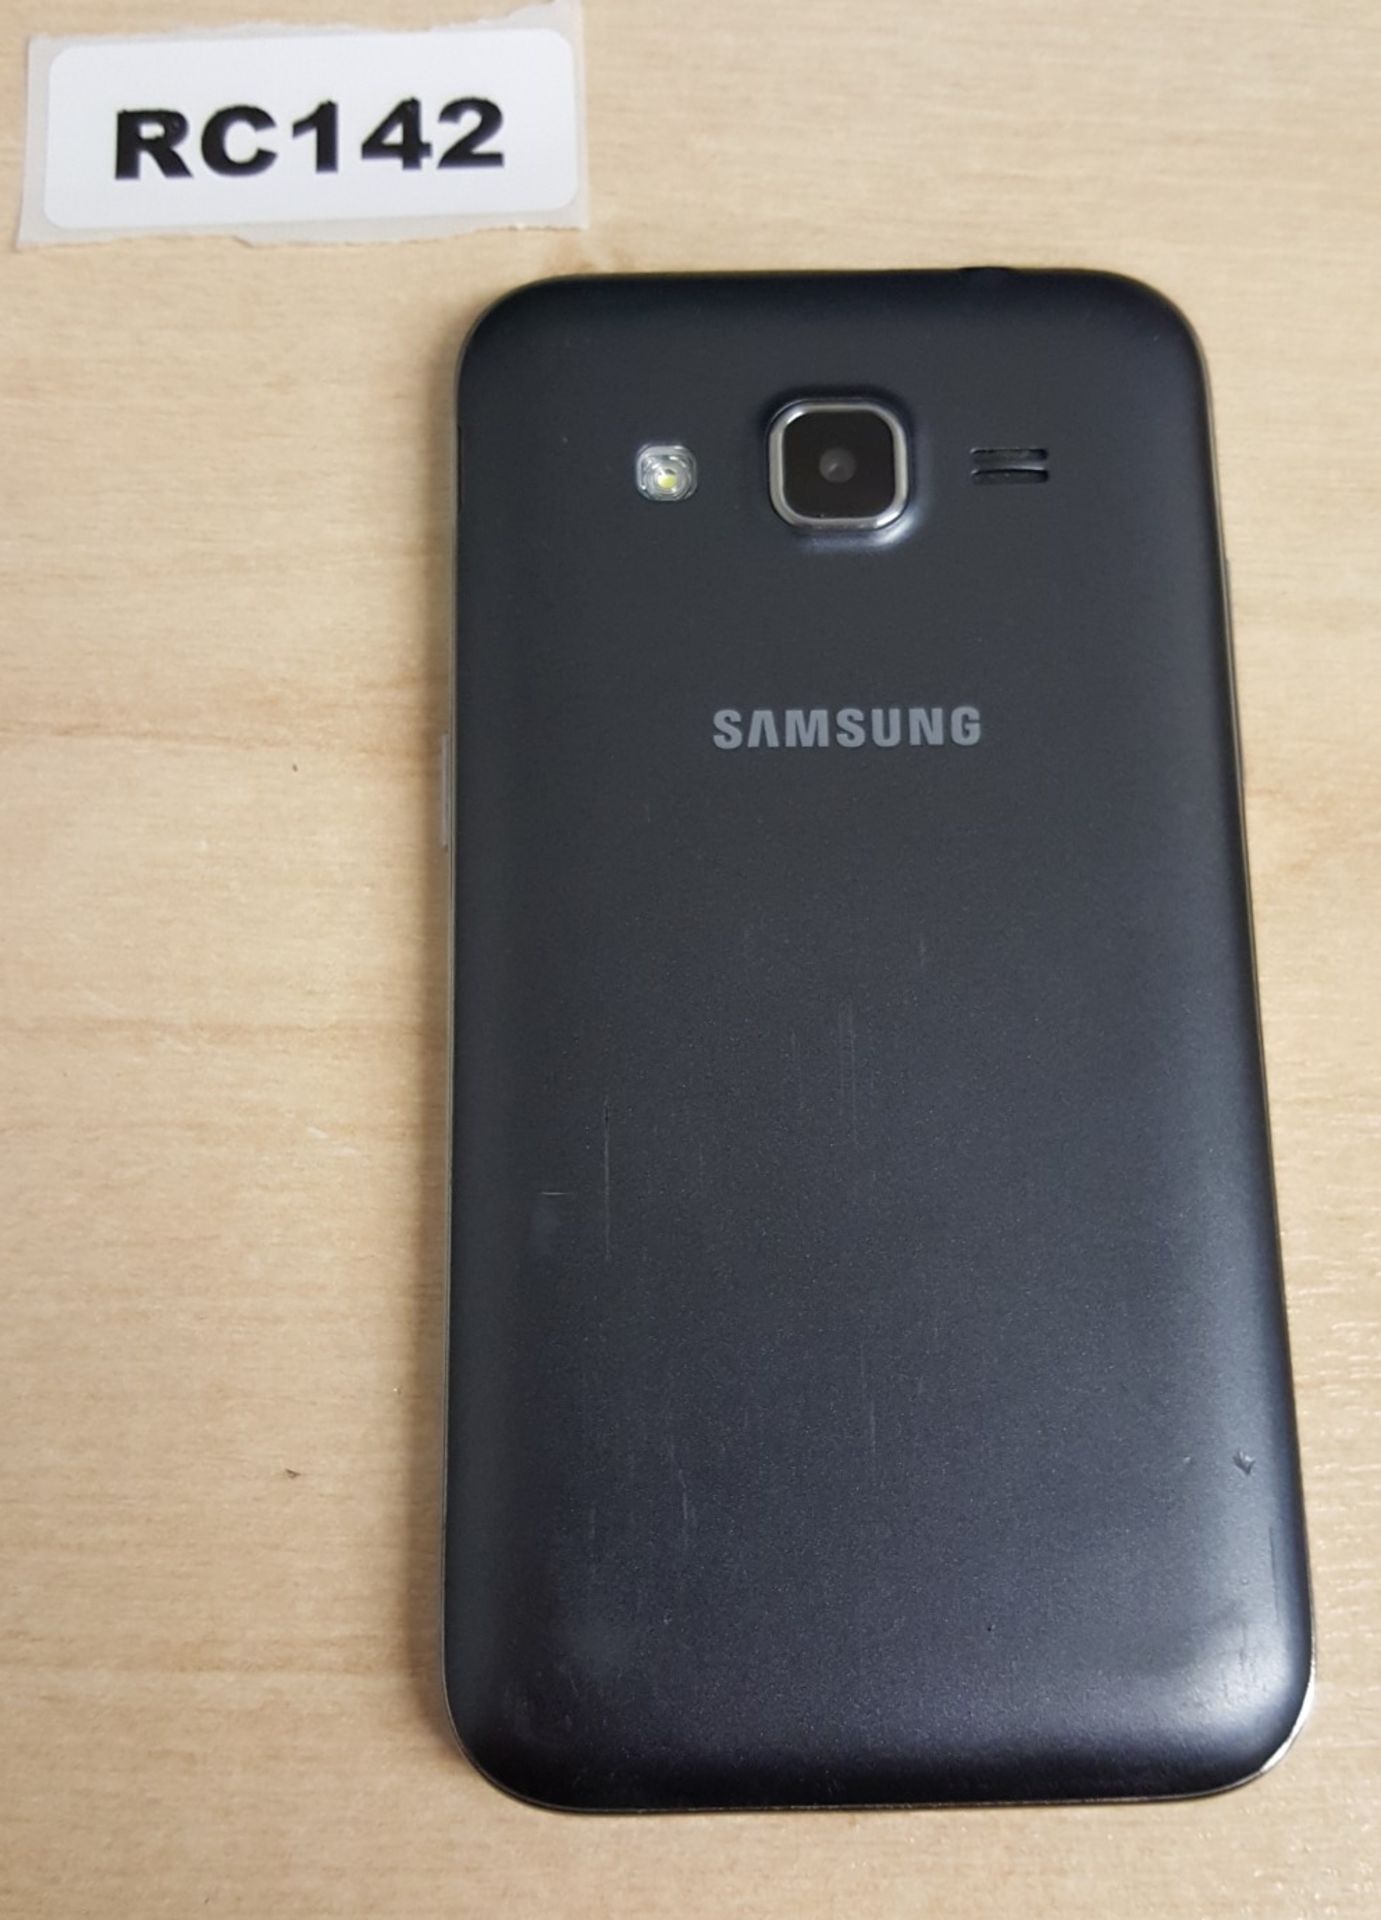 1 x Samsung Galaxy Core Prime Black Smartphone - Ref RC142 - Image 2 of 2